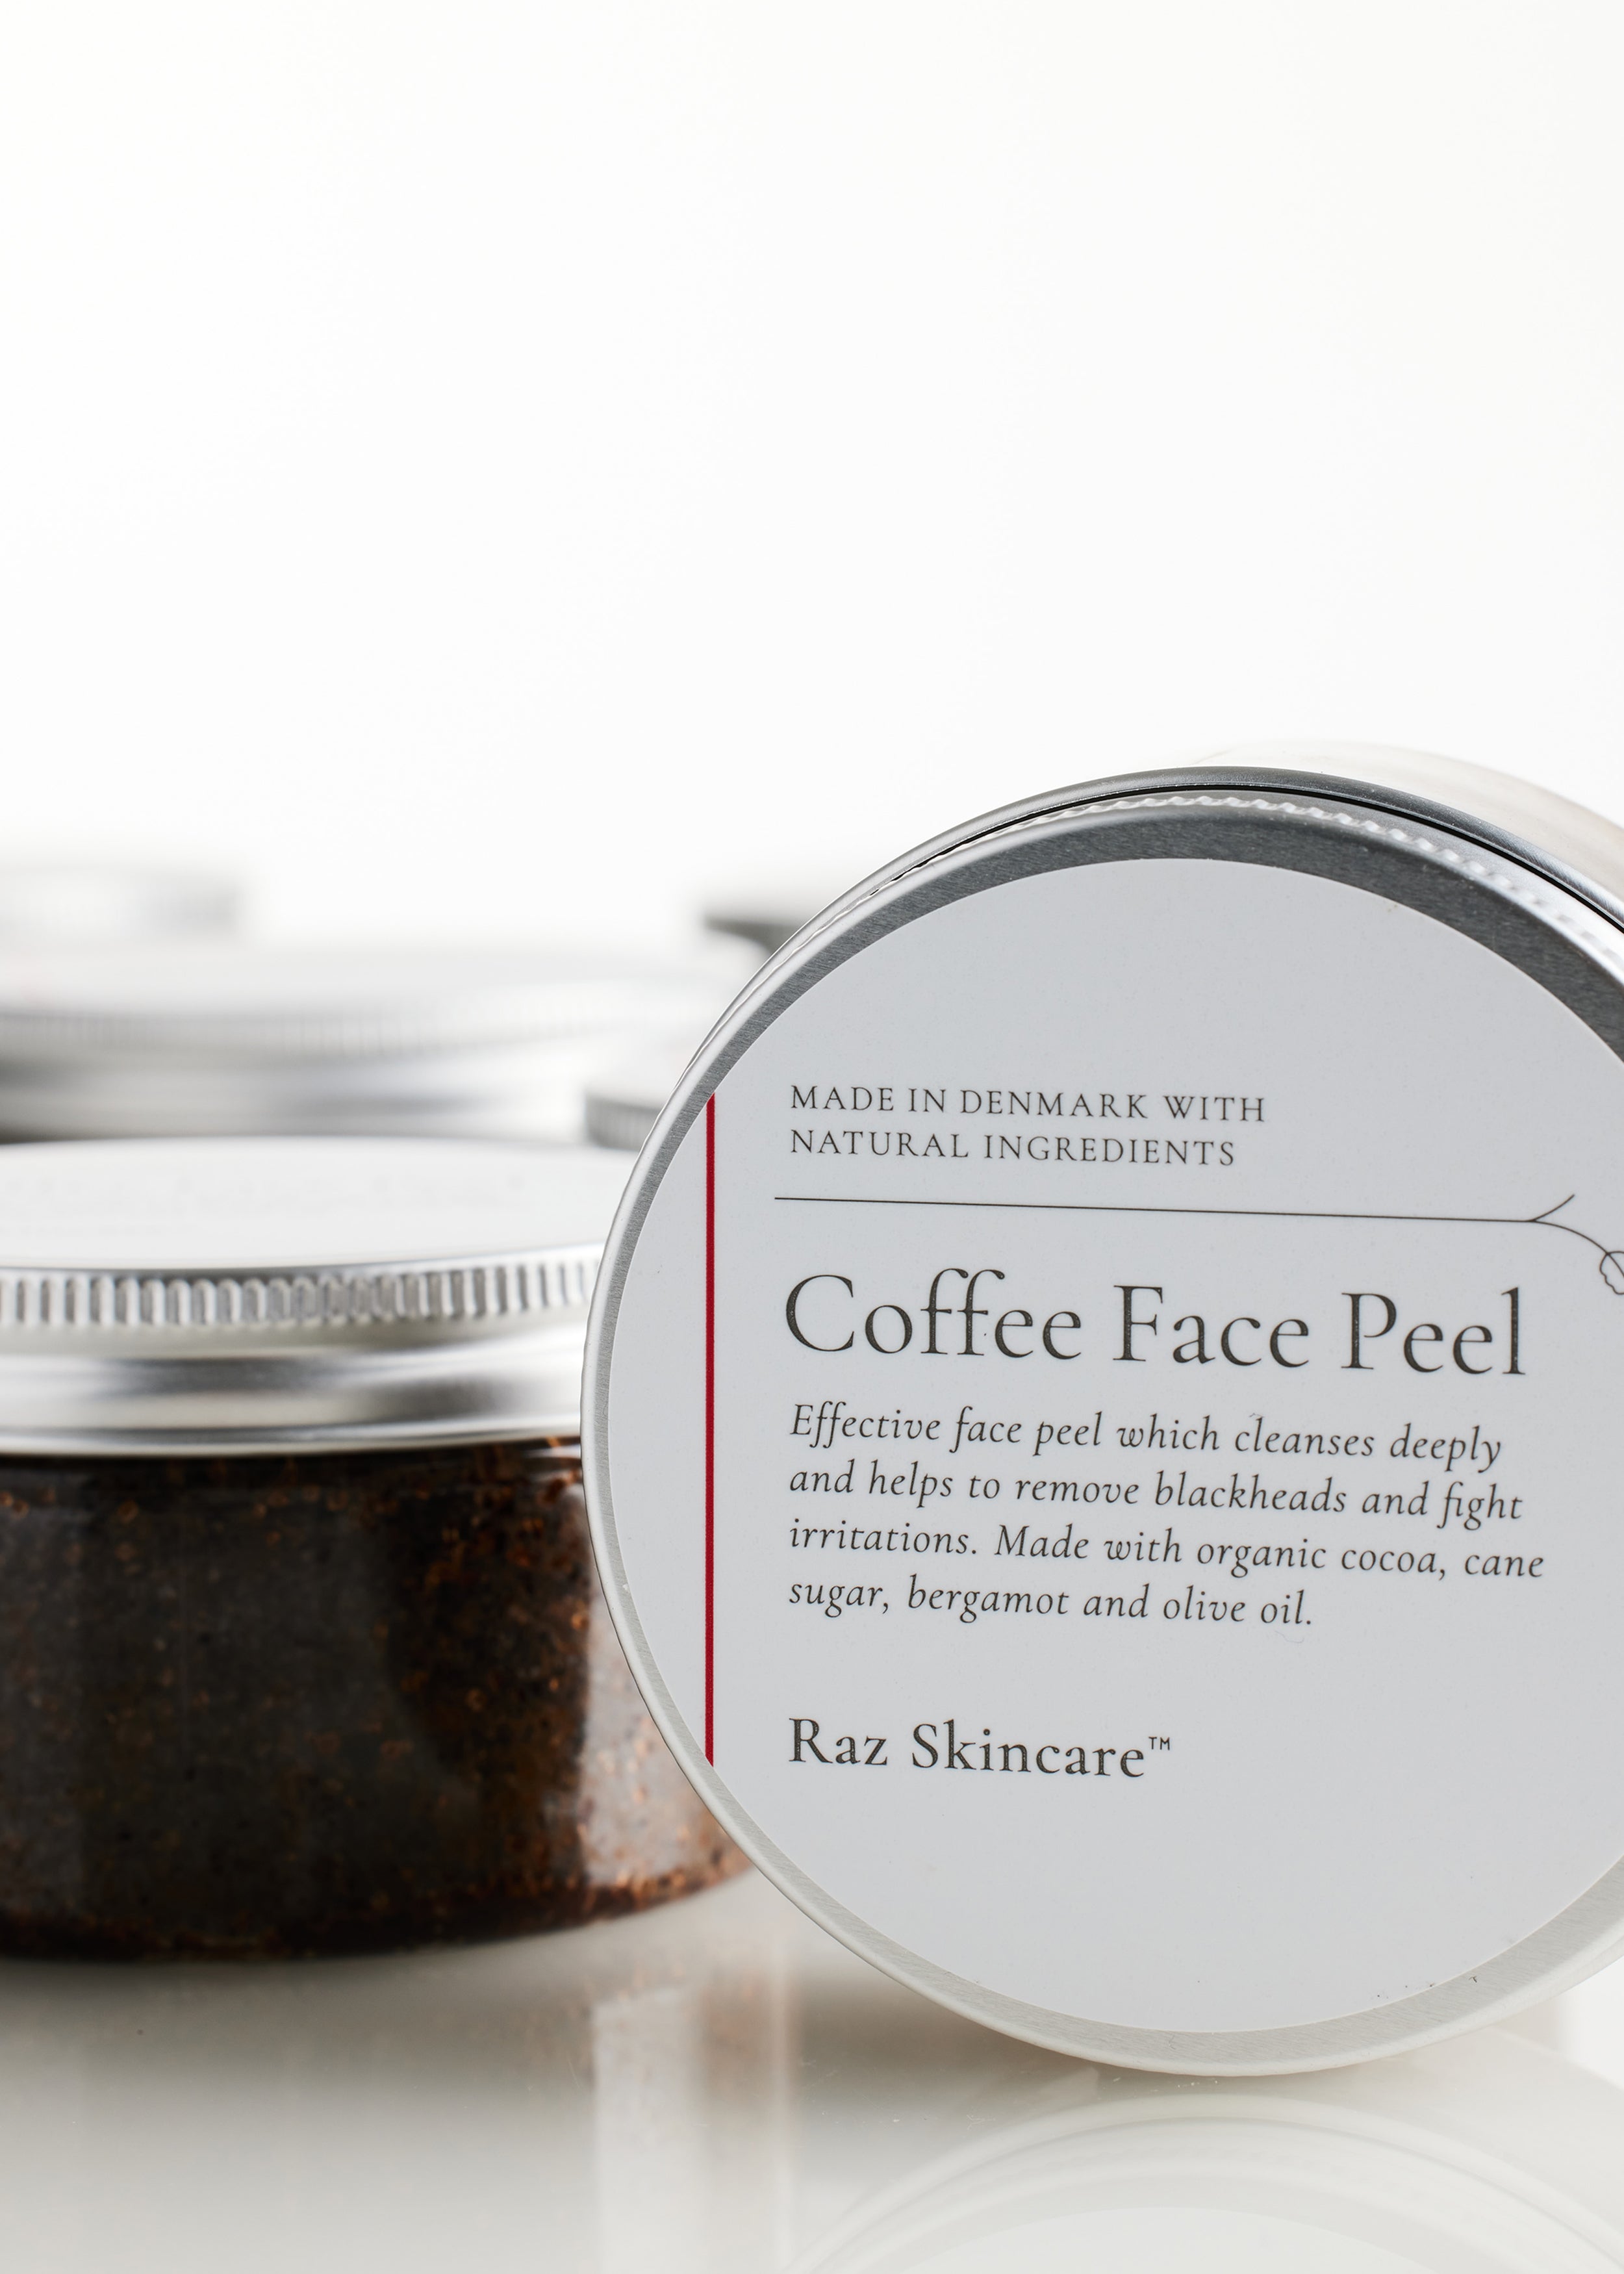 Coffee Face Peel 100g